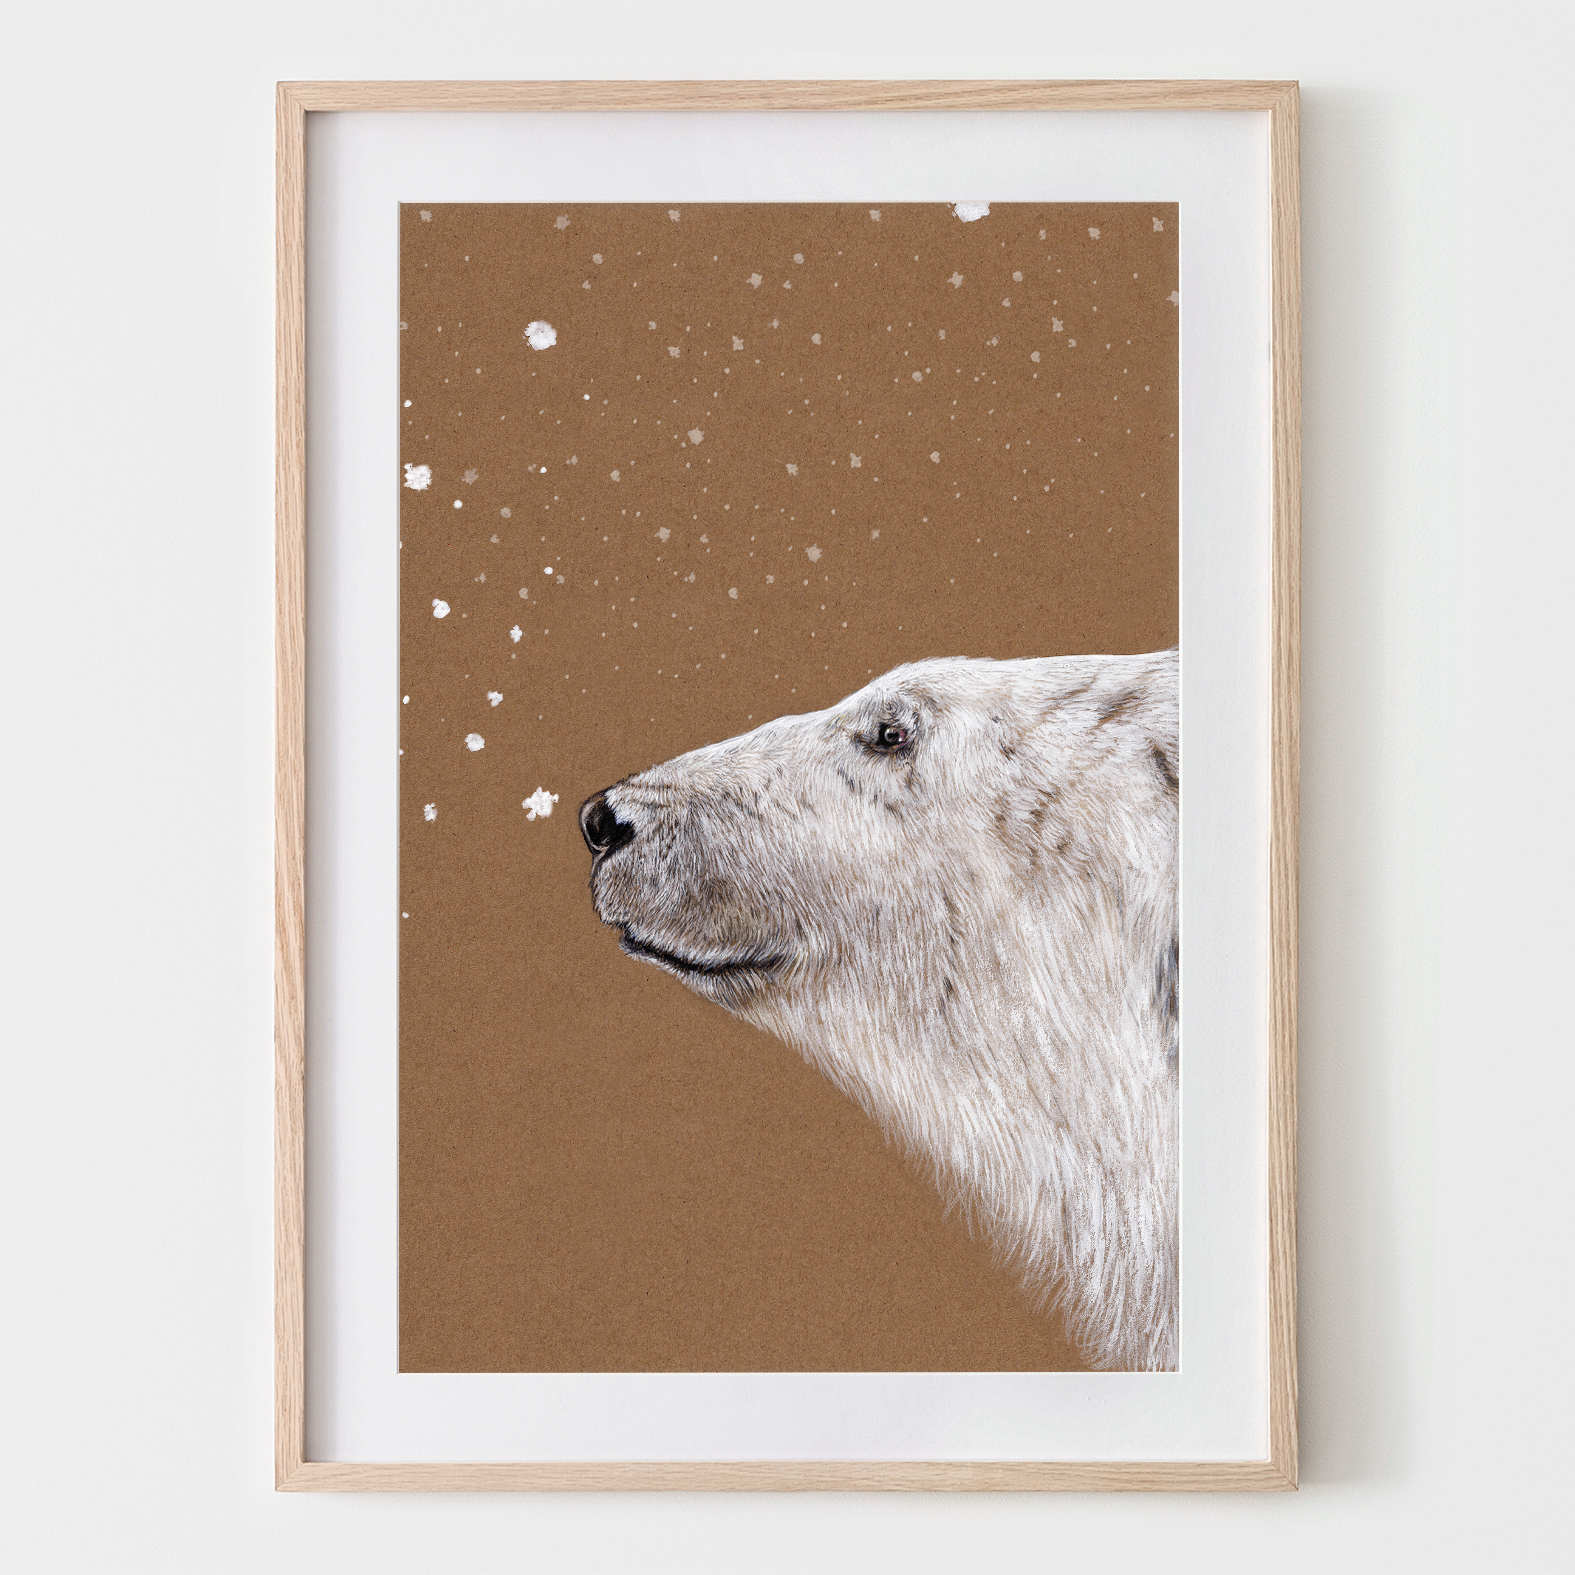 Polarbär, Eisbär, Fine Art Print, Giclée Print, Poster, Kunstdruck, Zeichnung